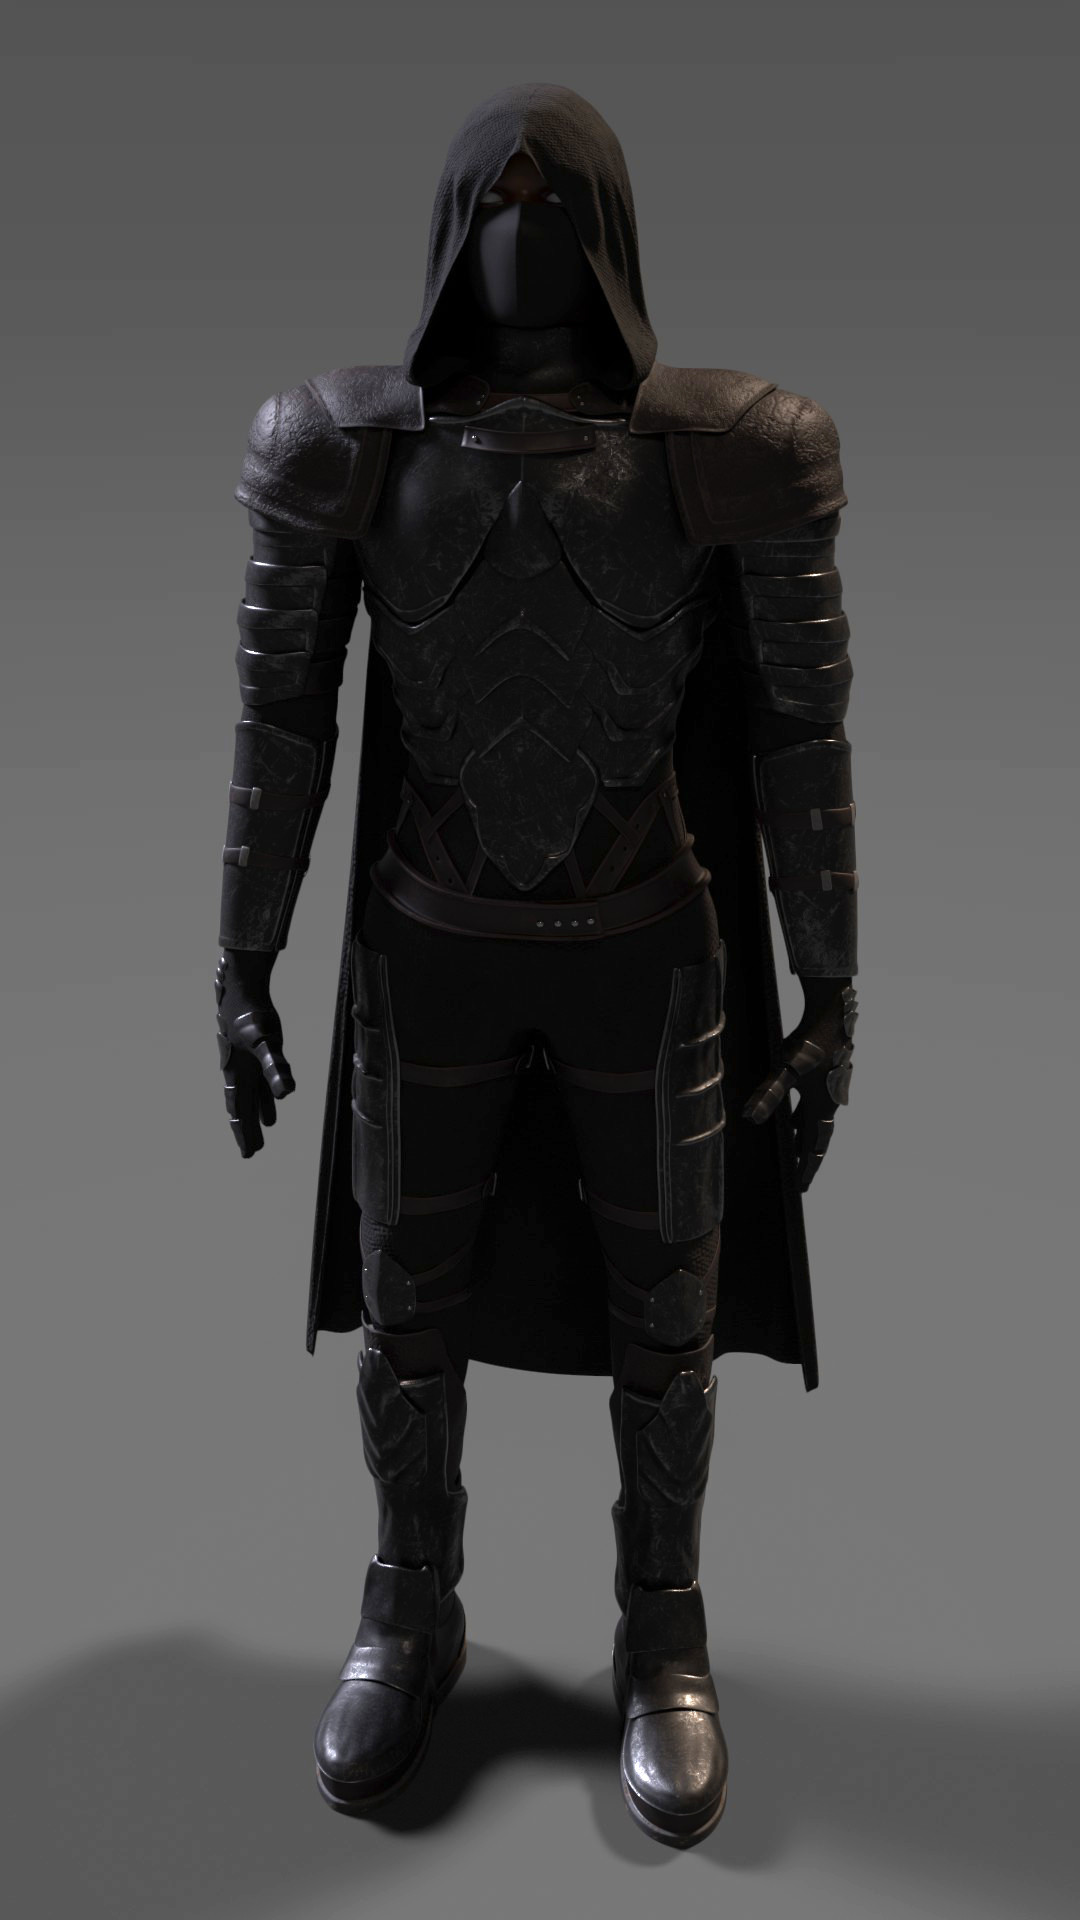 armored assassin